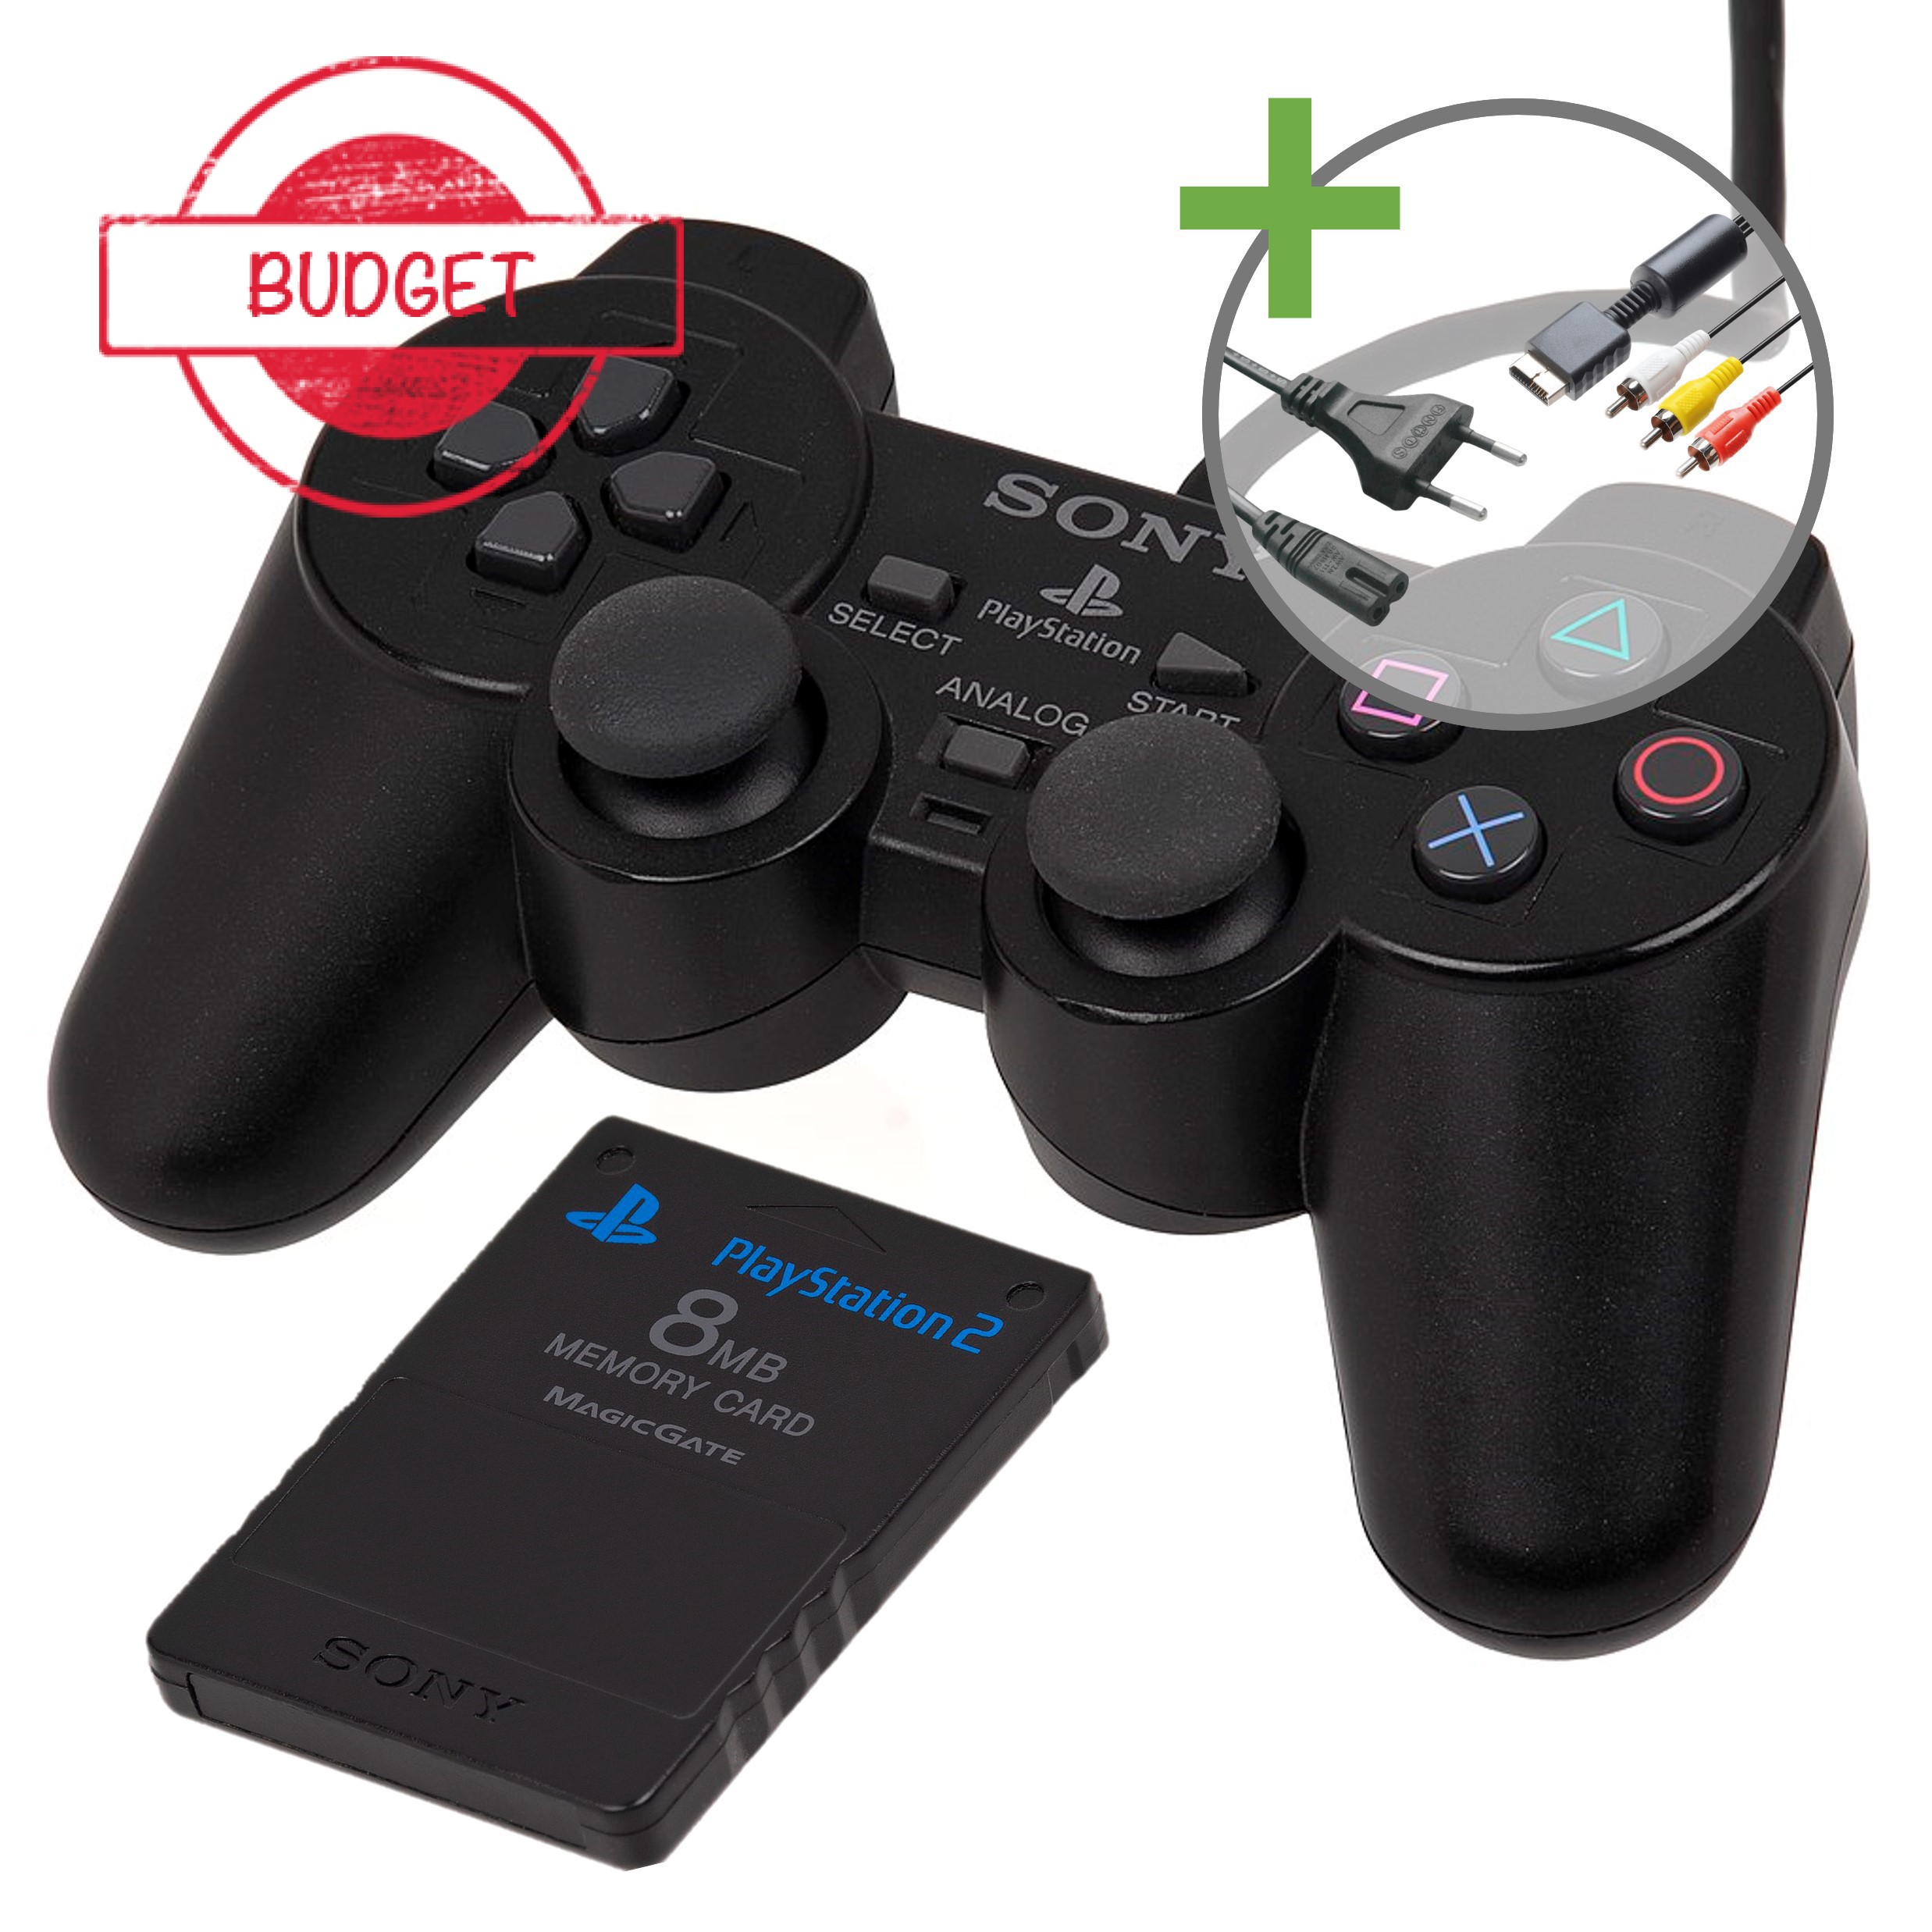 Sony PlayStation 2 Slim Starter Pack - Black Edition - Budget - Playstation 2 Hardware - 4